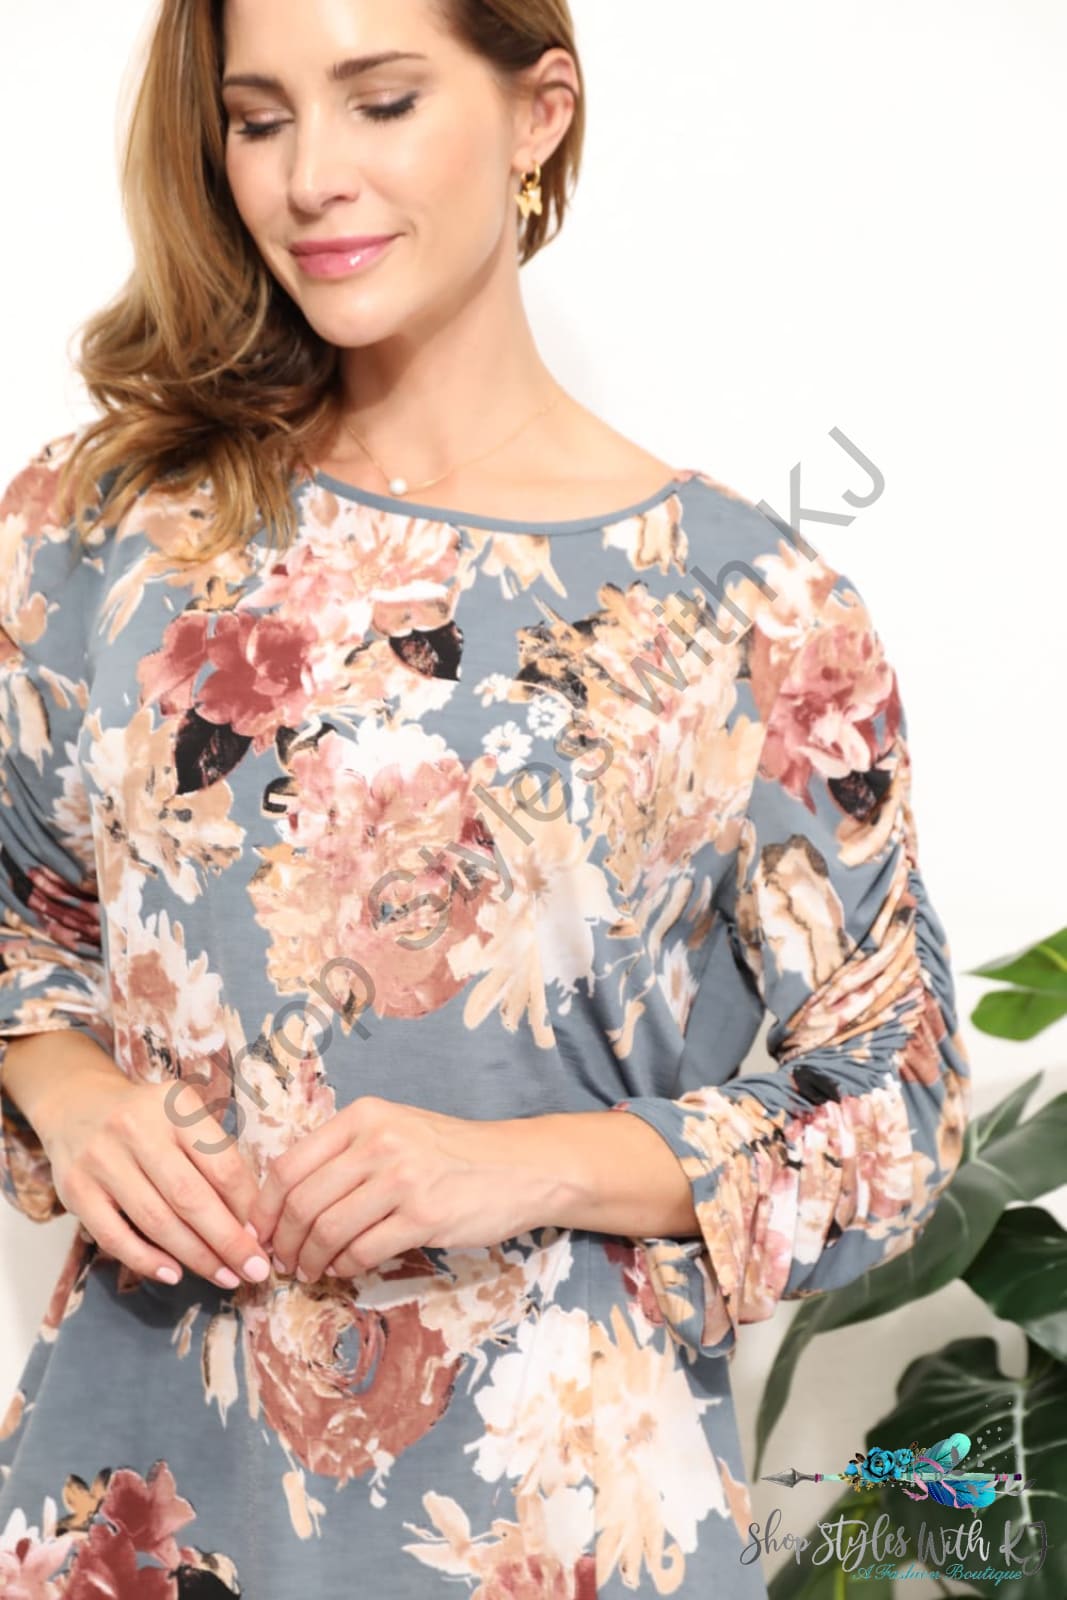 Flower Print Long Sleeve Top Shirts & Tops